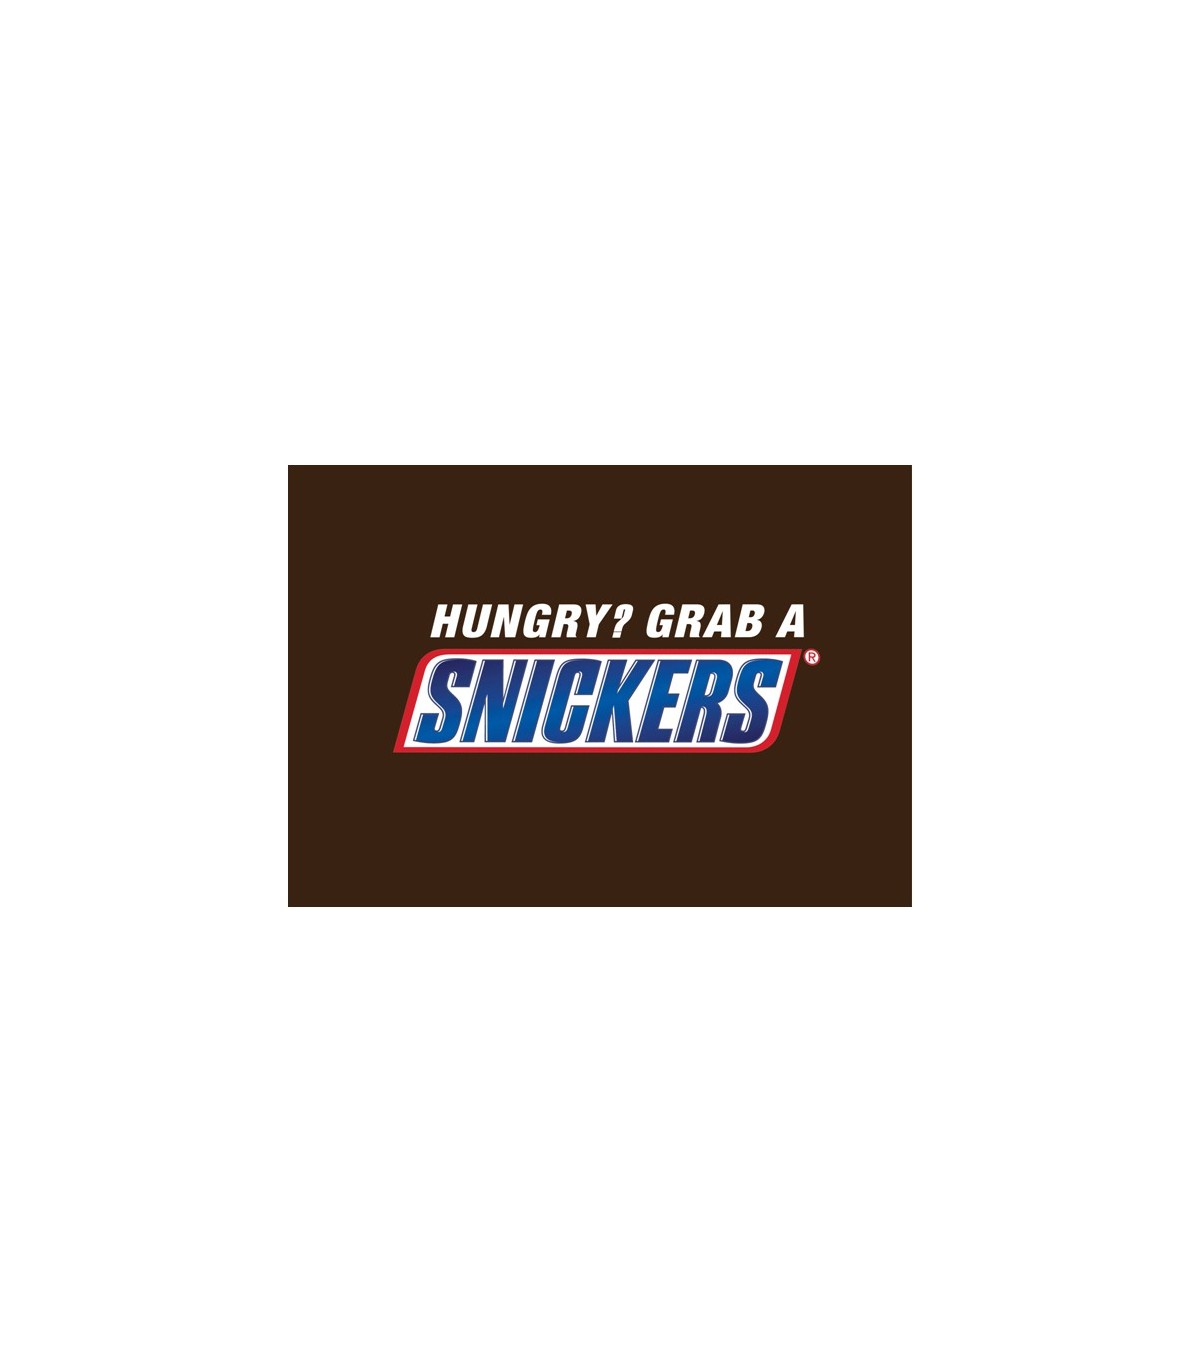 Snickers شکلات 50 گرمی اسنیکرز